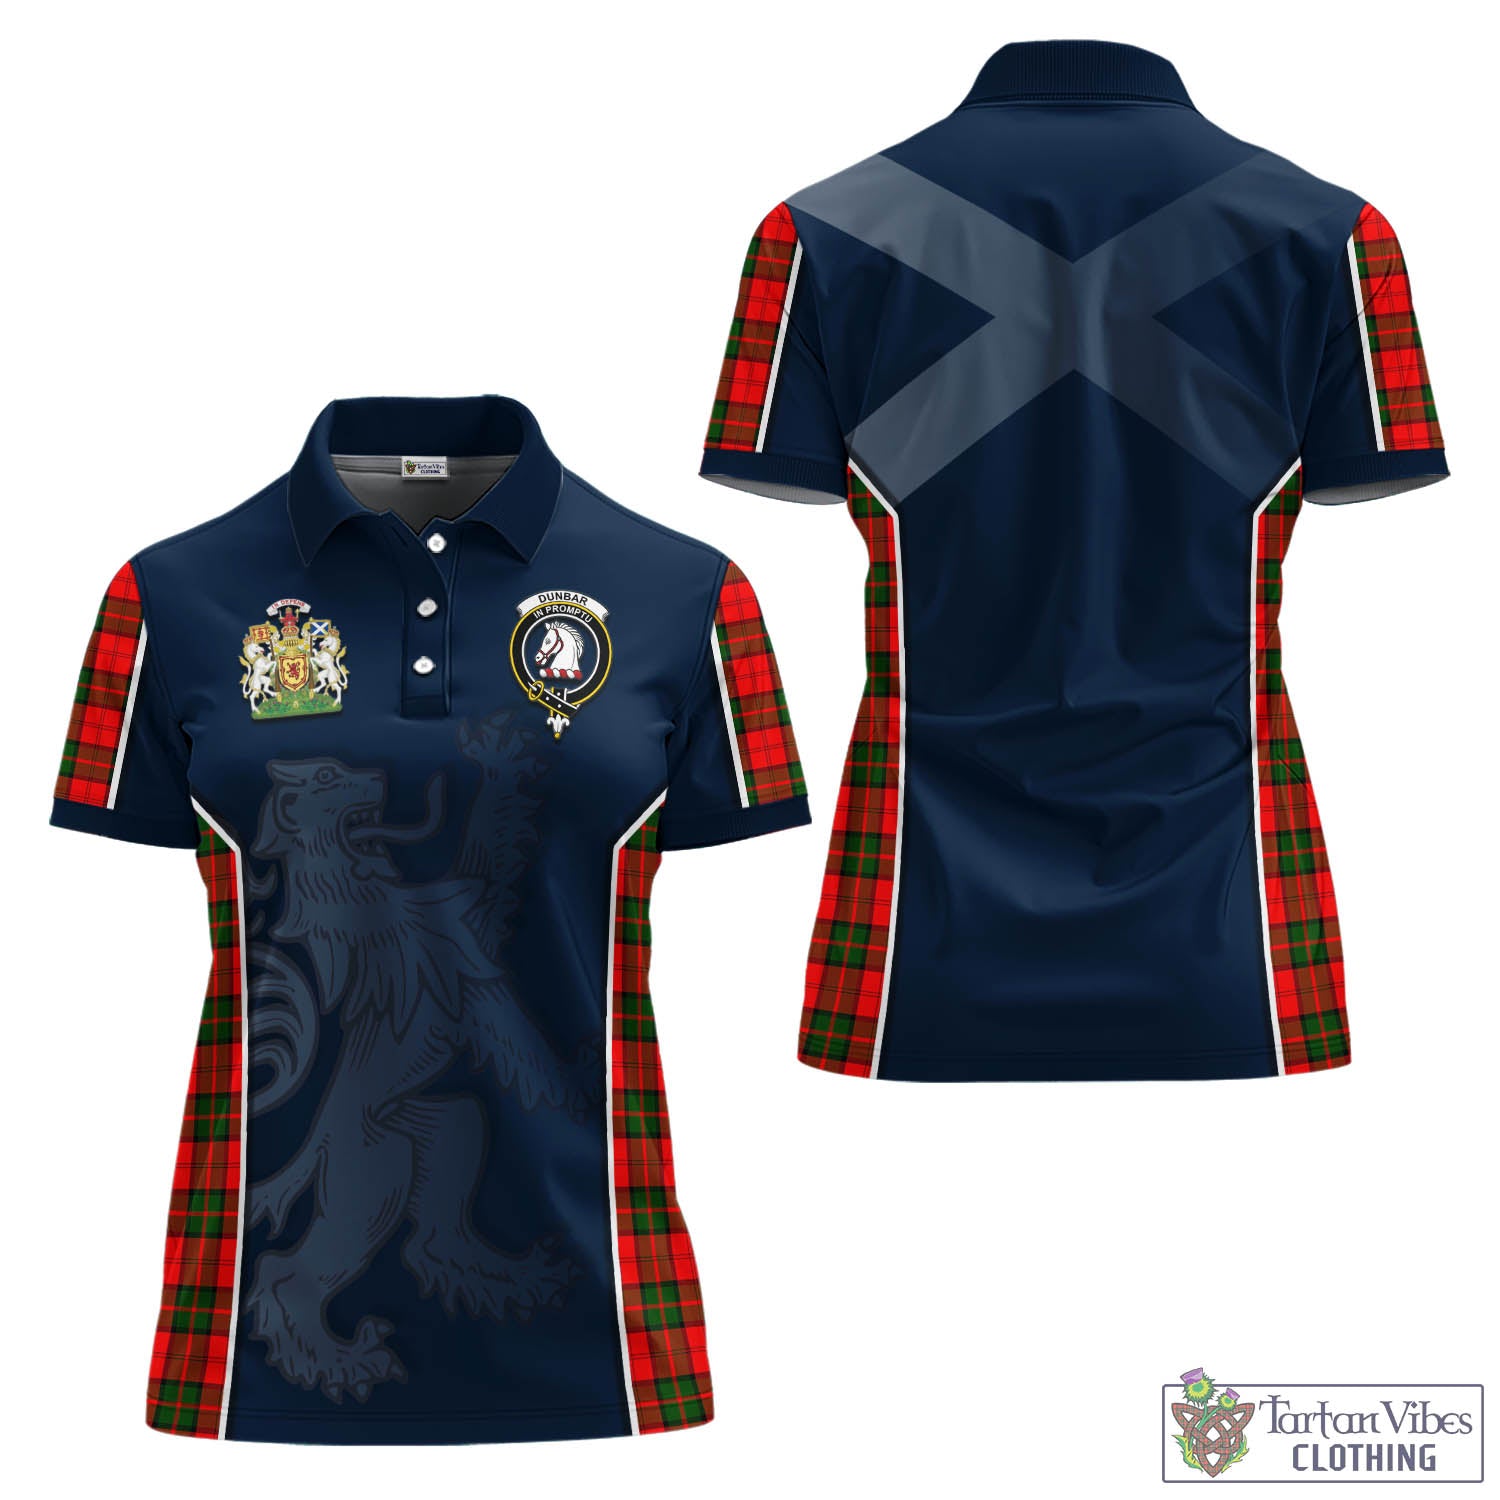 Tartan Vibes Clothing Dunbar Modern Tartan Women's Polo Shirt with Family Crest and Lion Rampant Vibes Sport Style